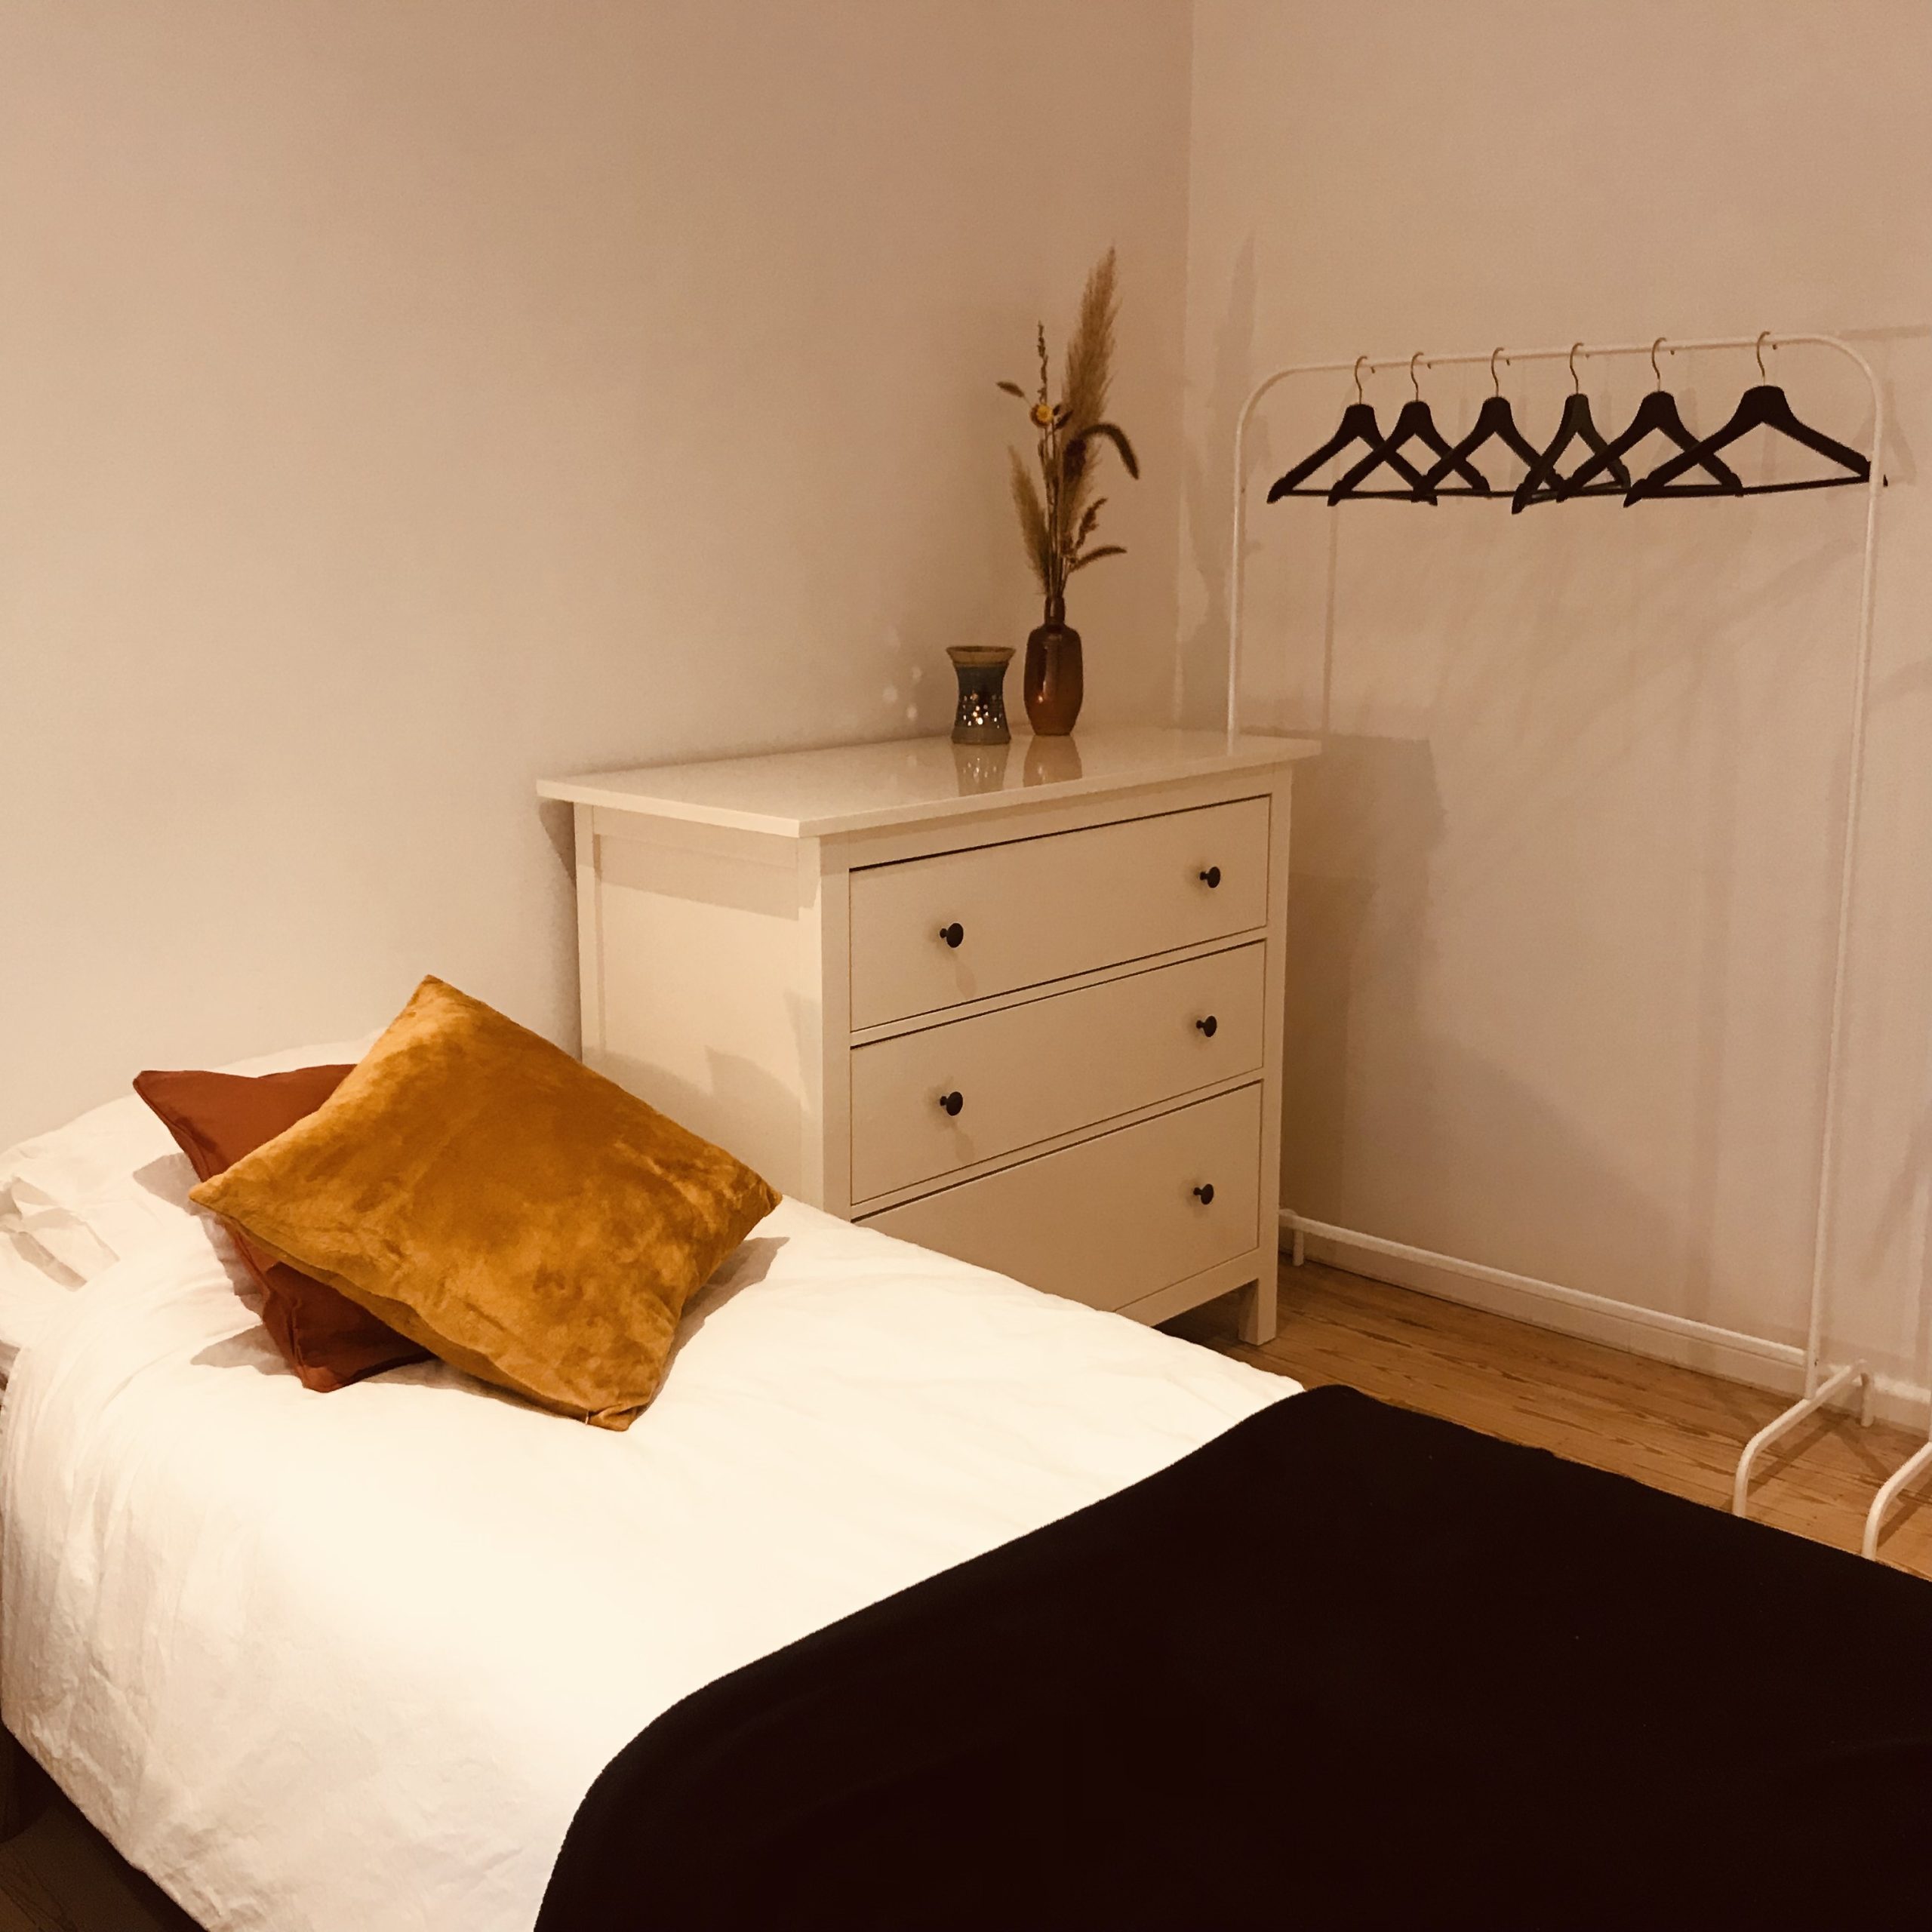 Apartment for rent in Deurne-bedroom